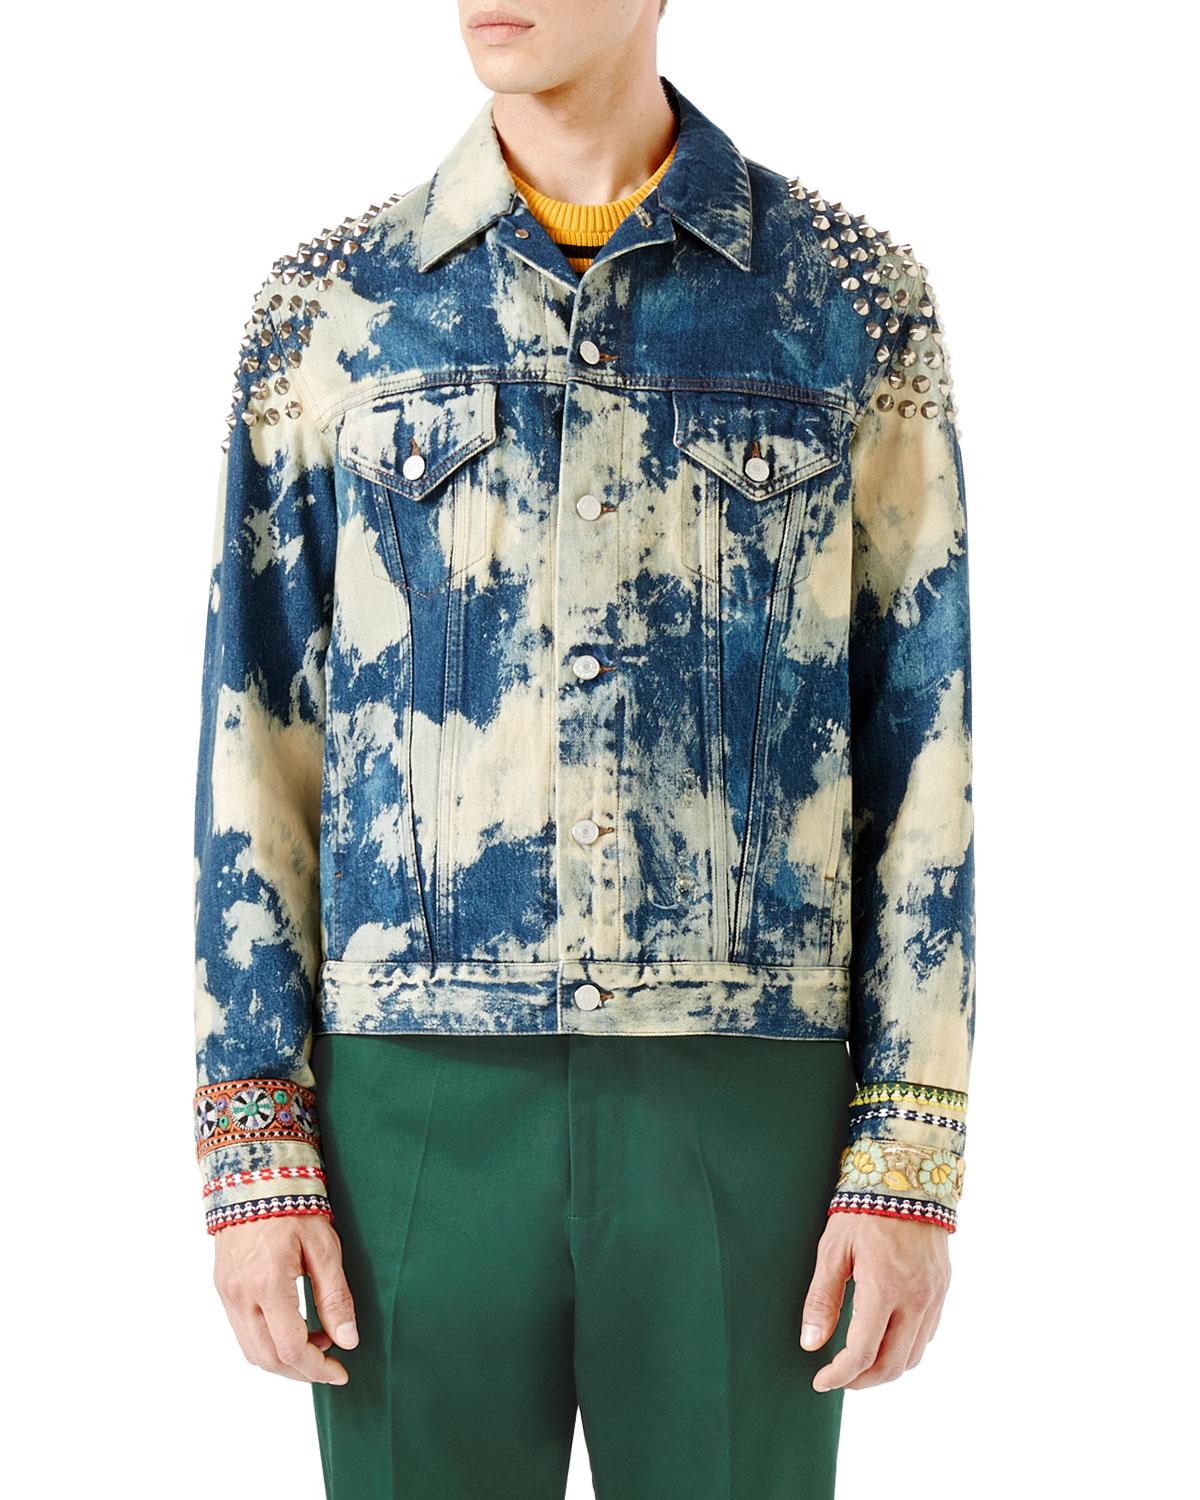 Lyst - Gucci Washed Studded Denim Jacket in Blue for Men